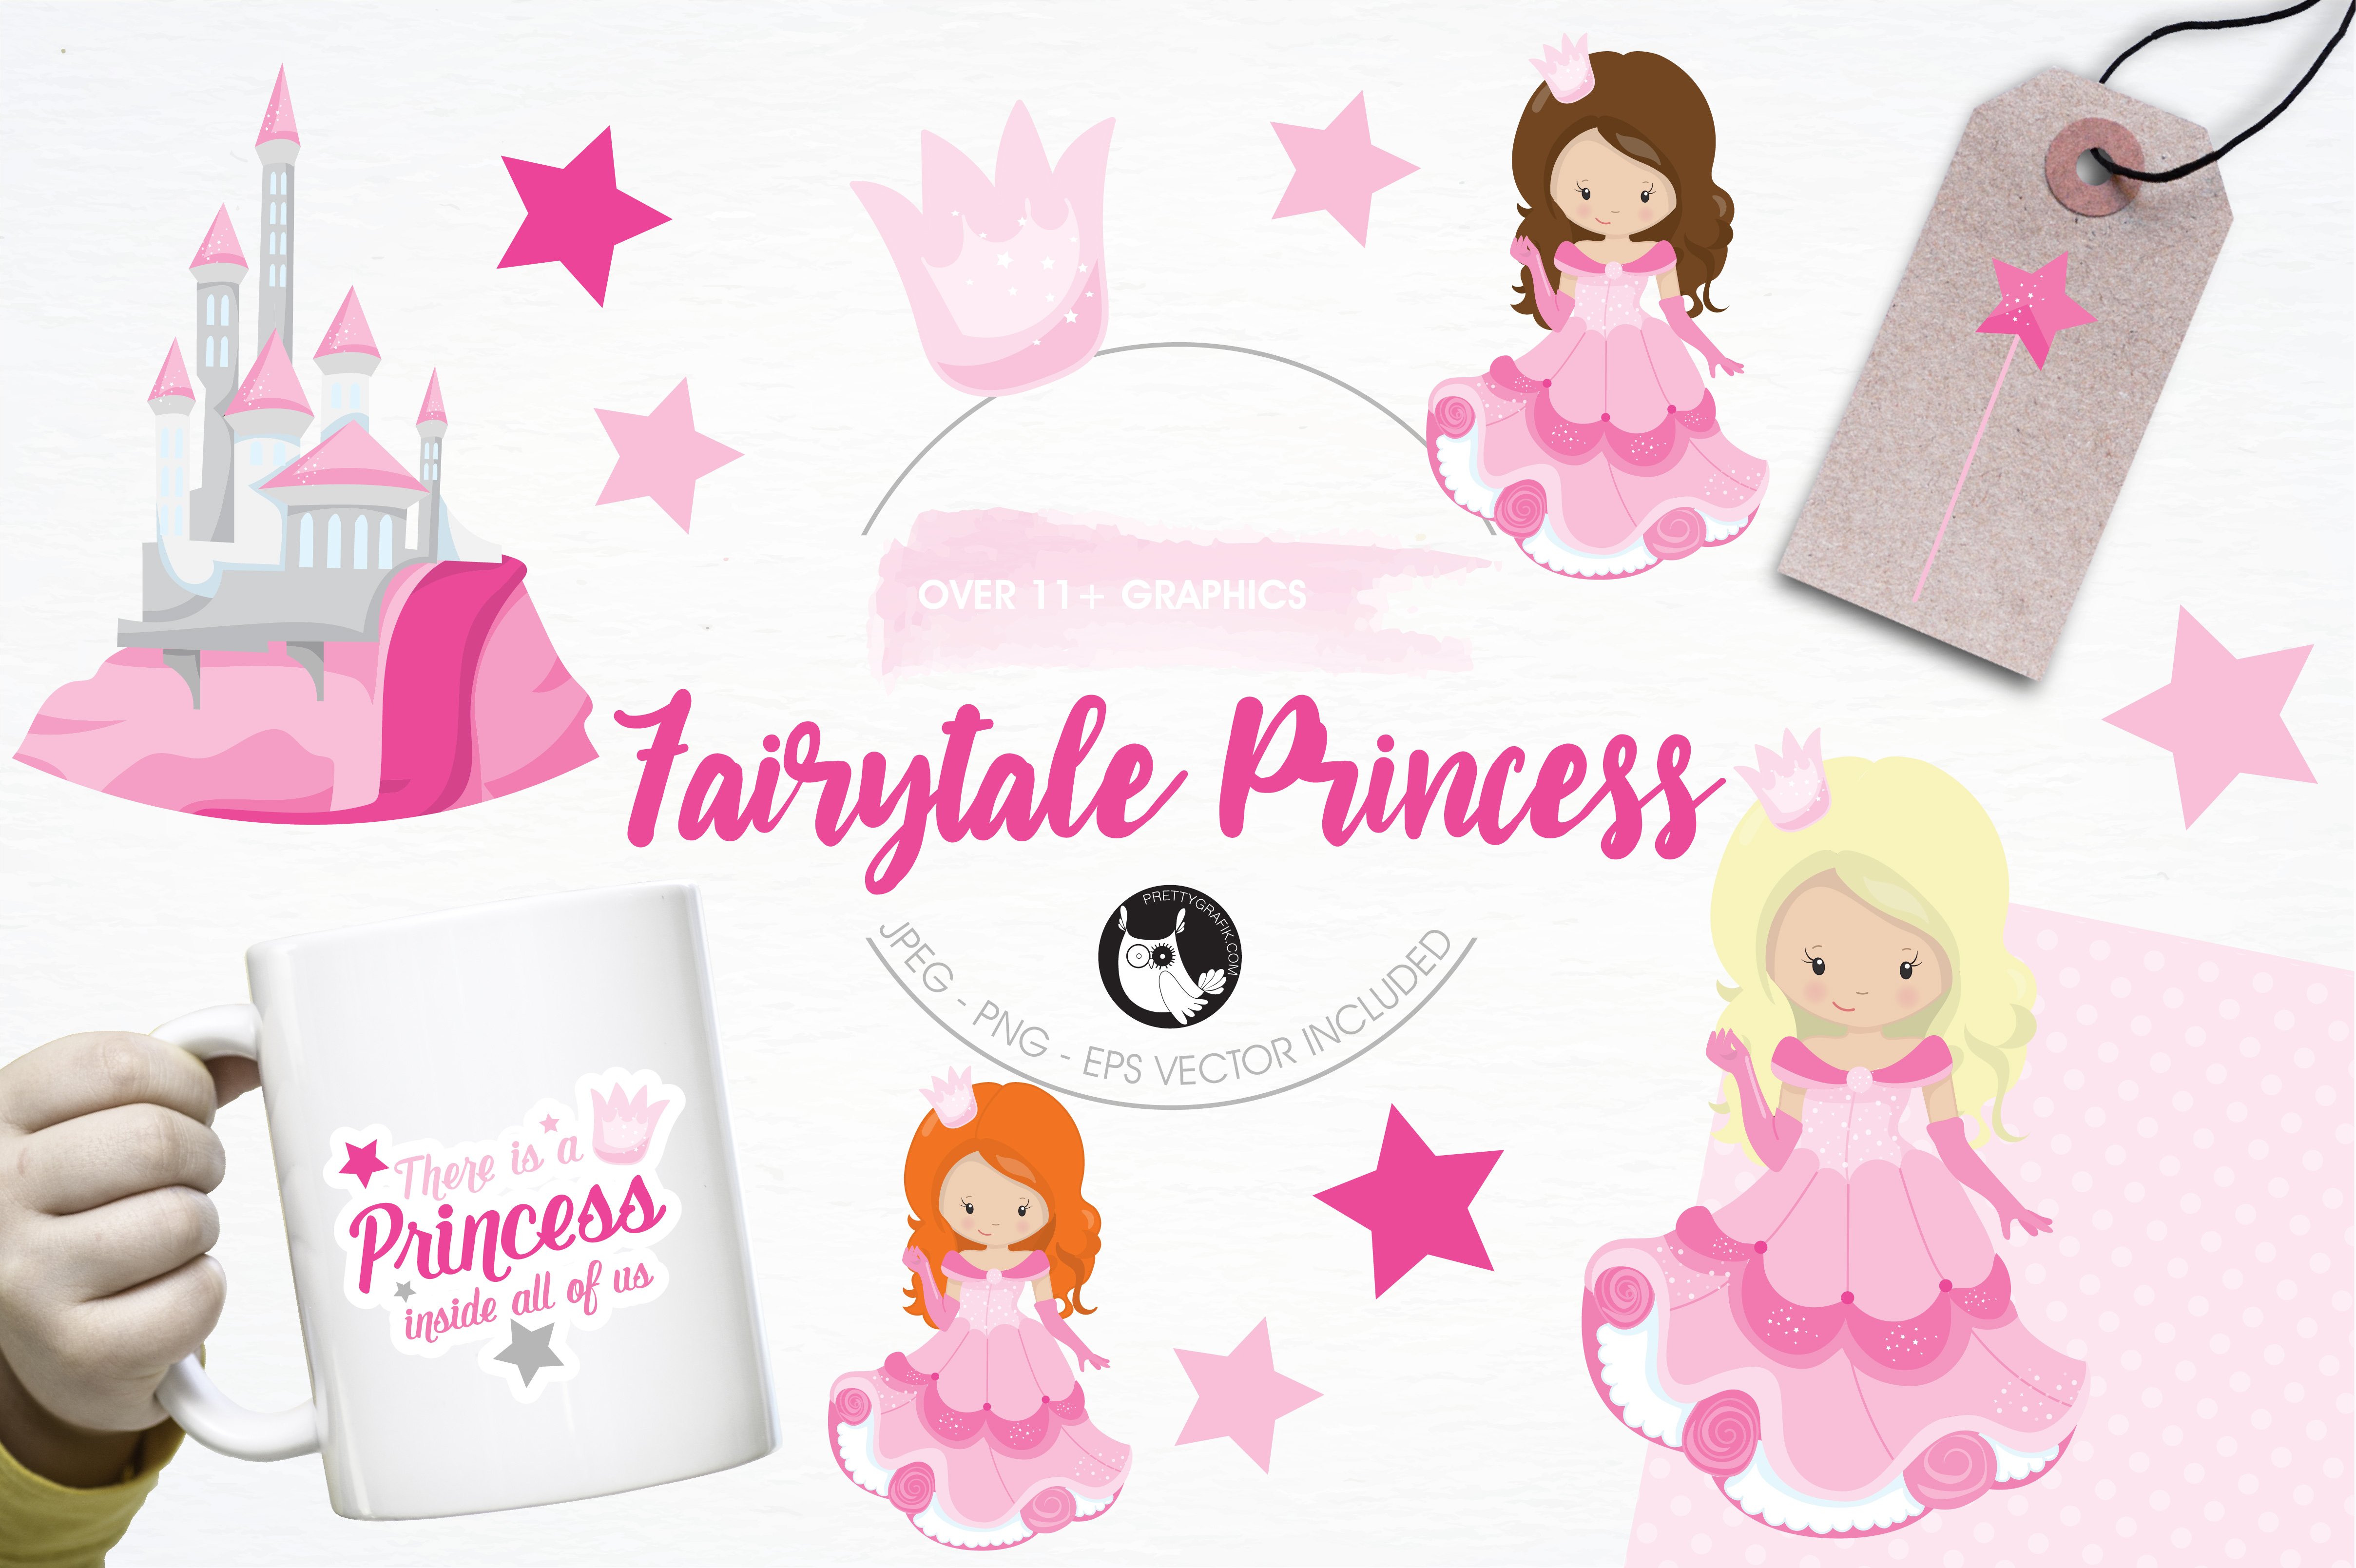 Fairytale princess illustration pack - Vector Image